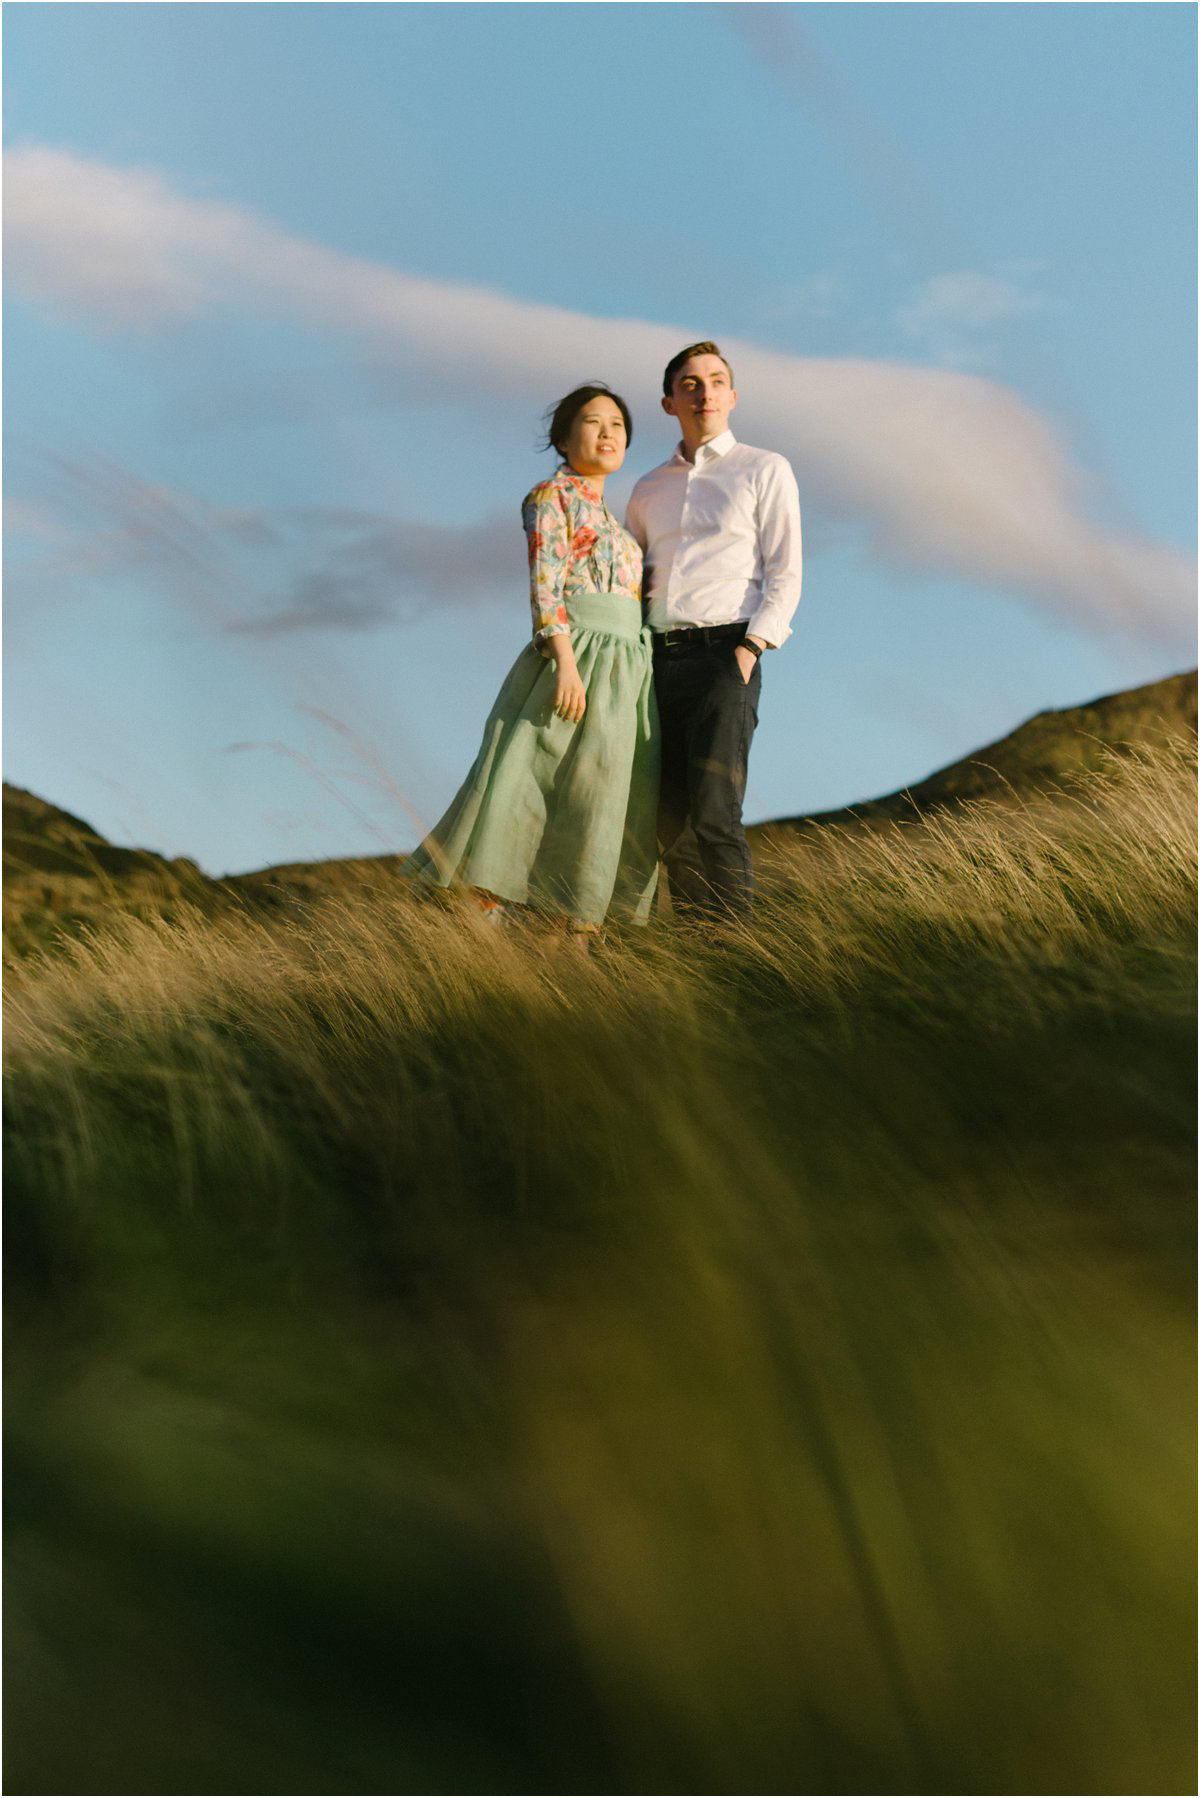  Cro&Kow Engagement shoot in Edinburgh with Korean Bride and British groom 